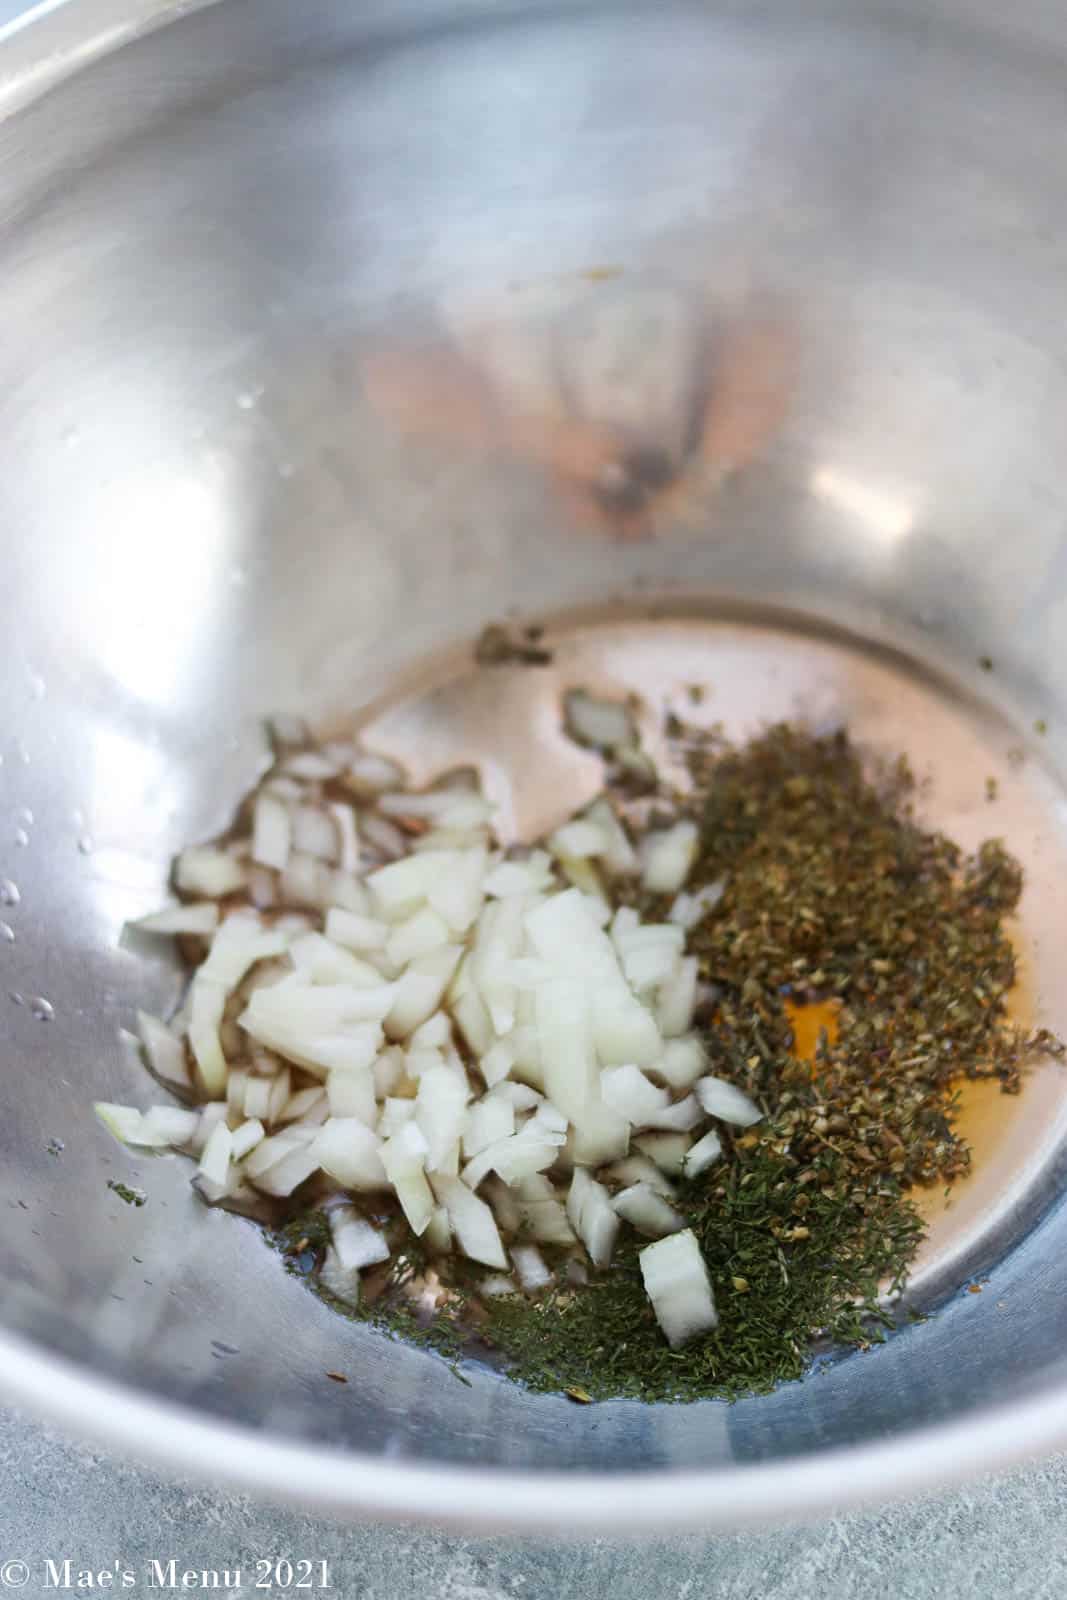 Greek cinaigrette ingredients in a mixing bowl